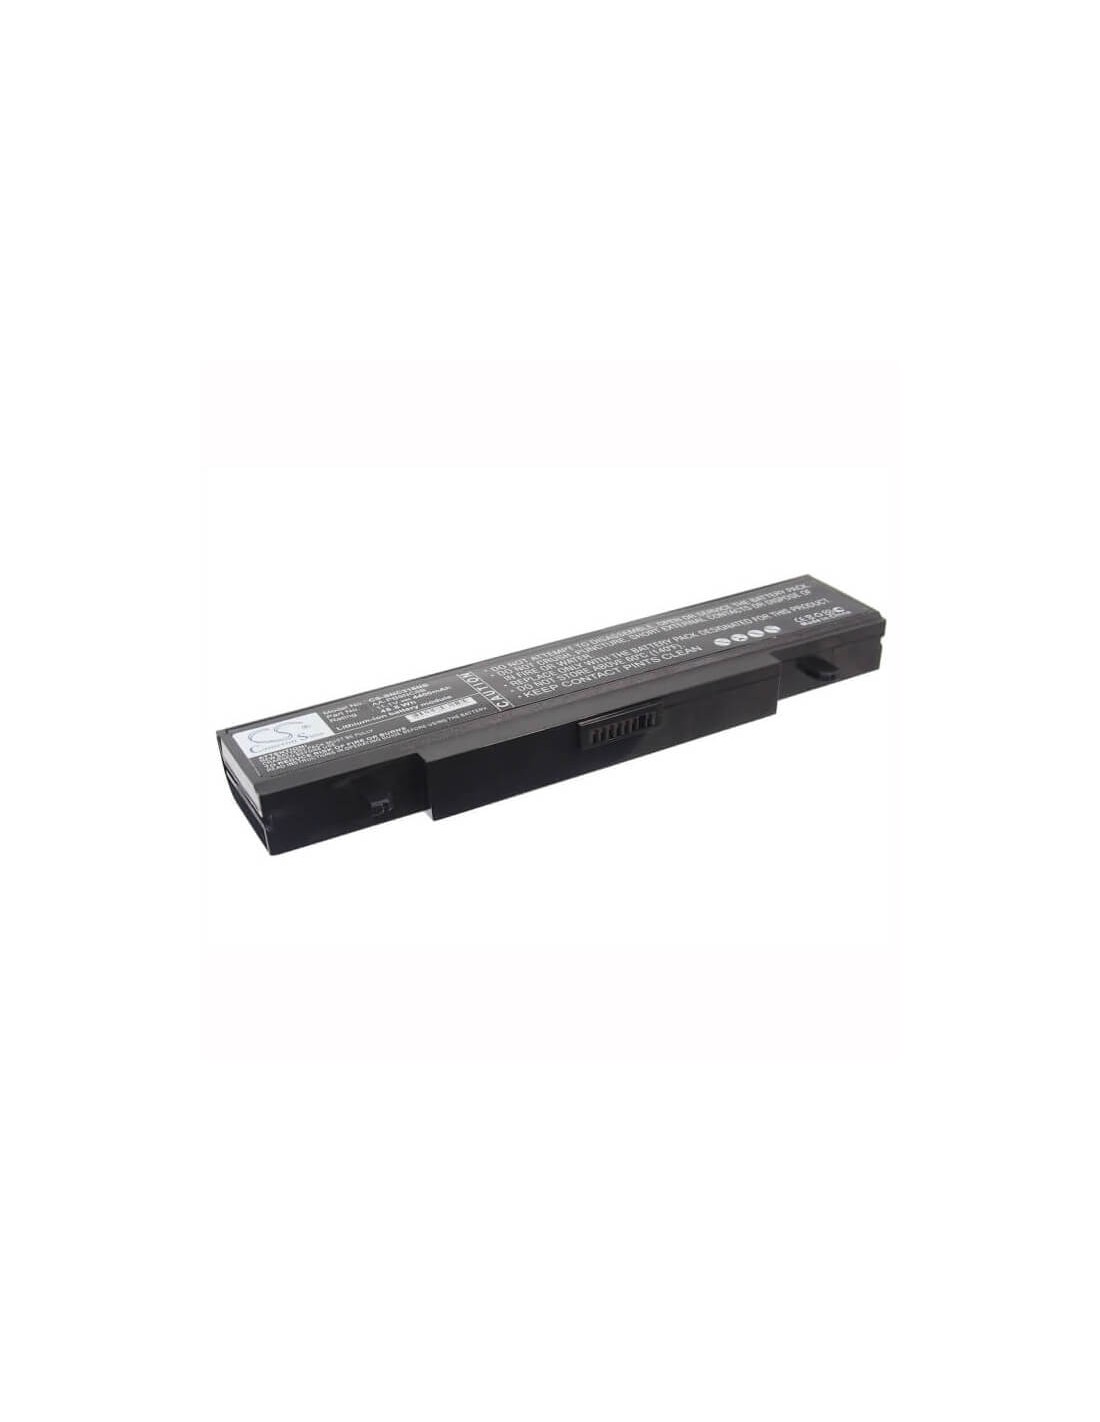 Black Battery for Samsung Q318, Q318-dsoe, Q318-ds0h 11.1V, 4400mAh - 48.84Wh